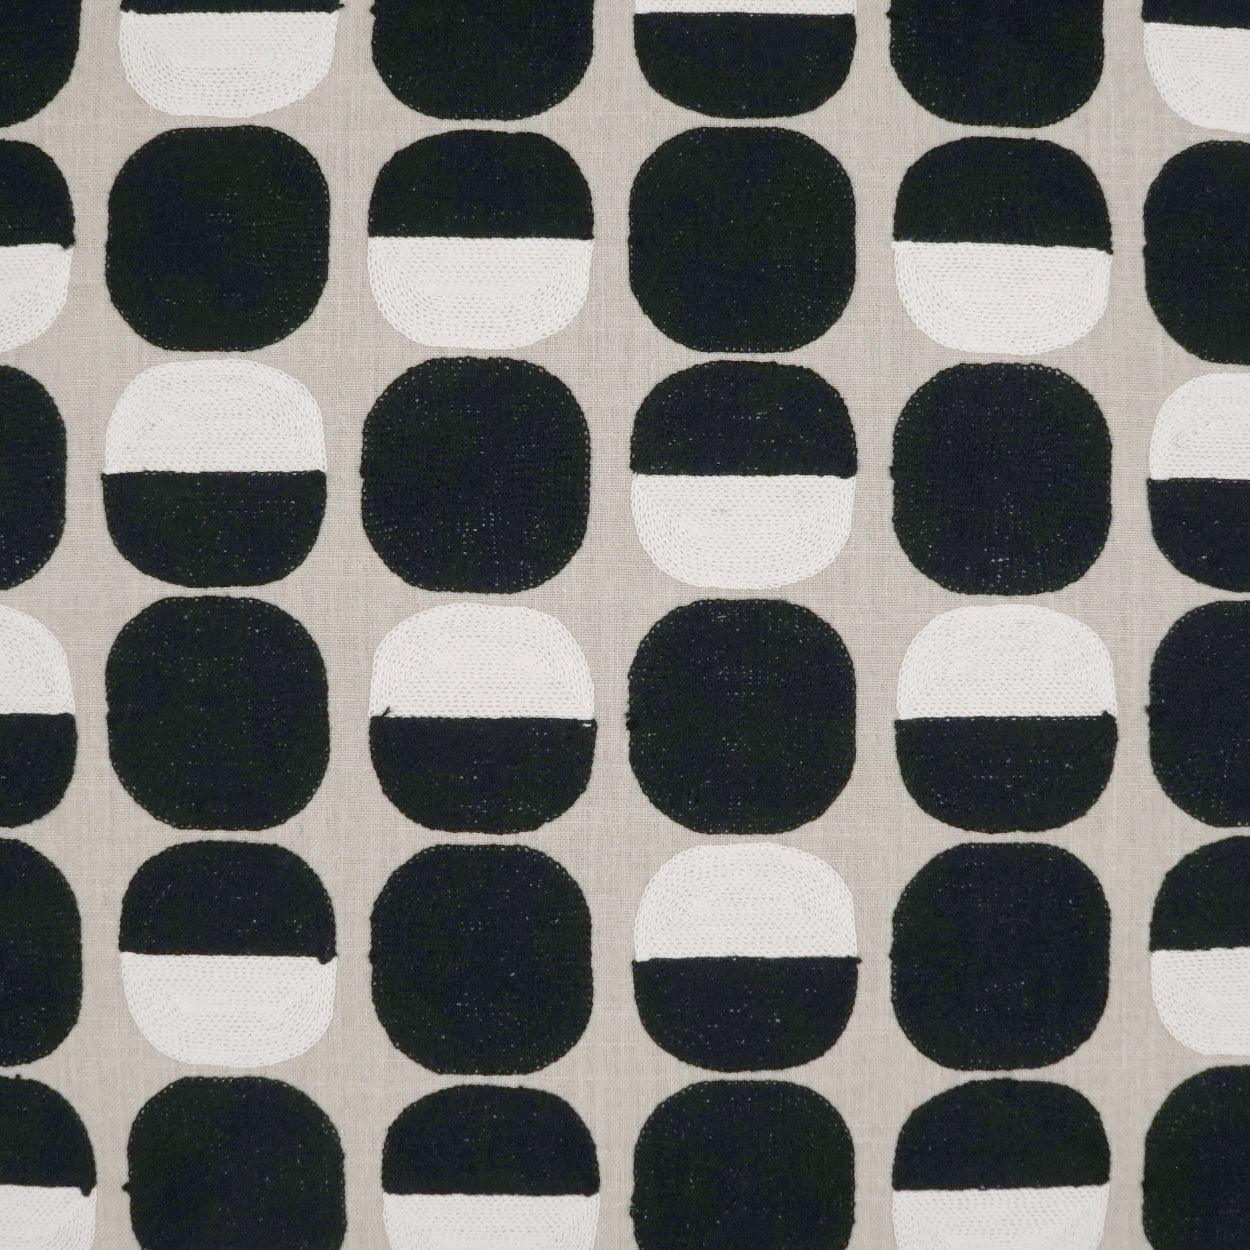 Zuri Onyx Circular Dots Black Large Throw Pillow With Insert - Uptown Sebastian